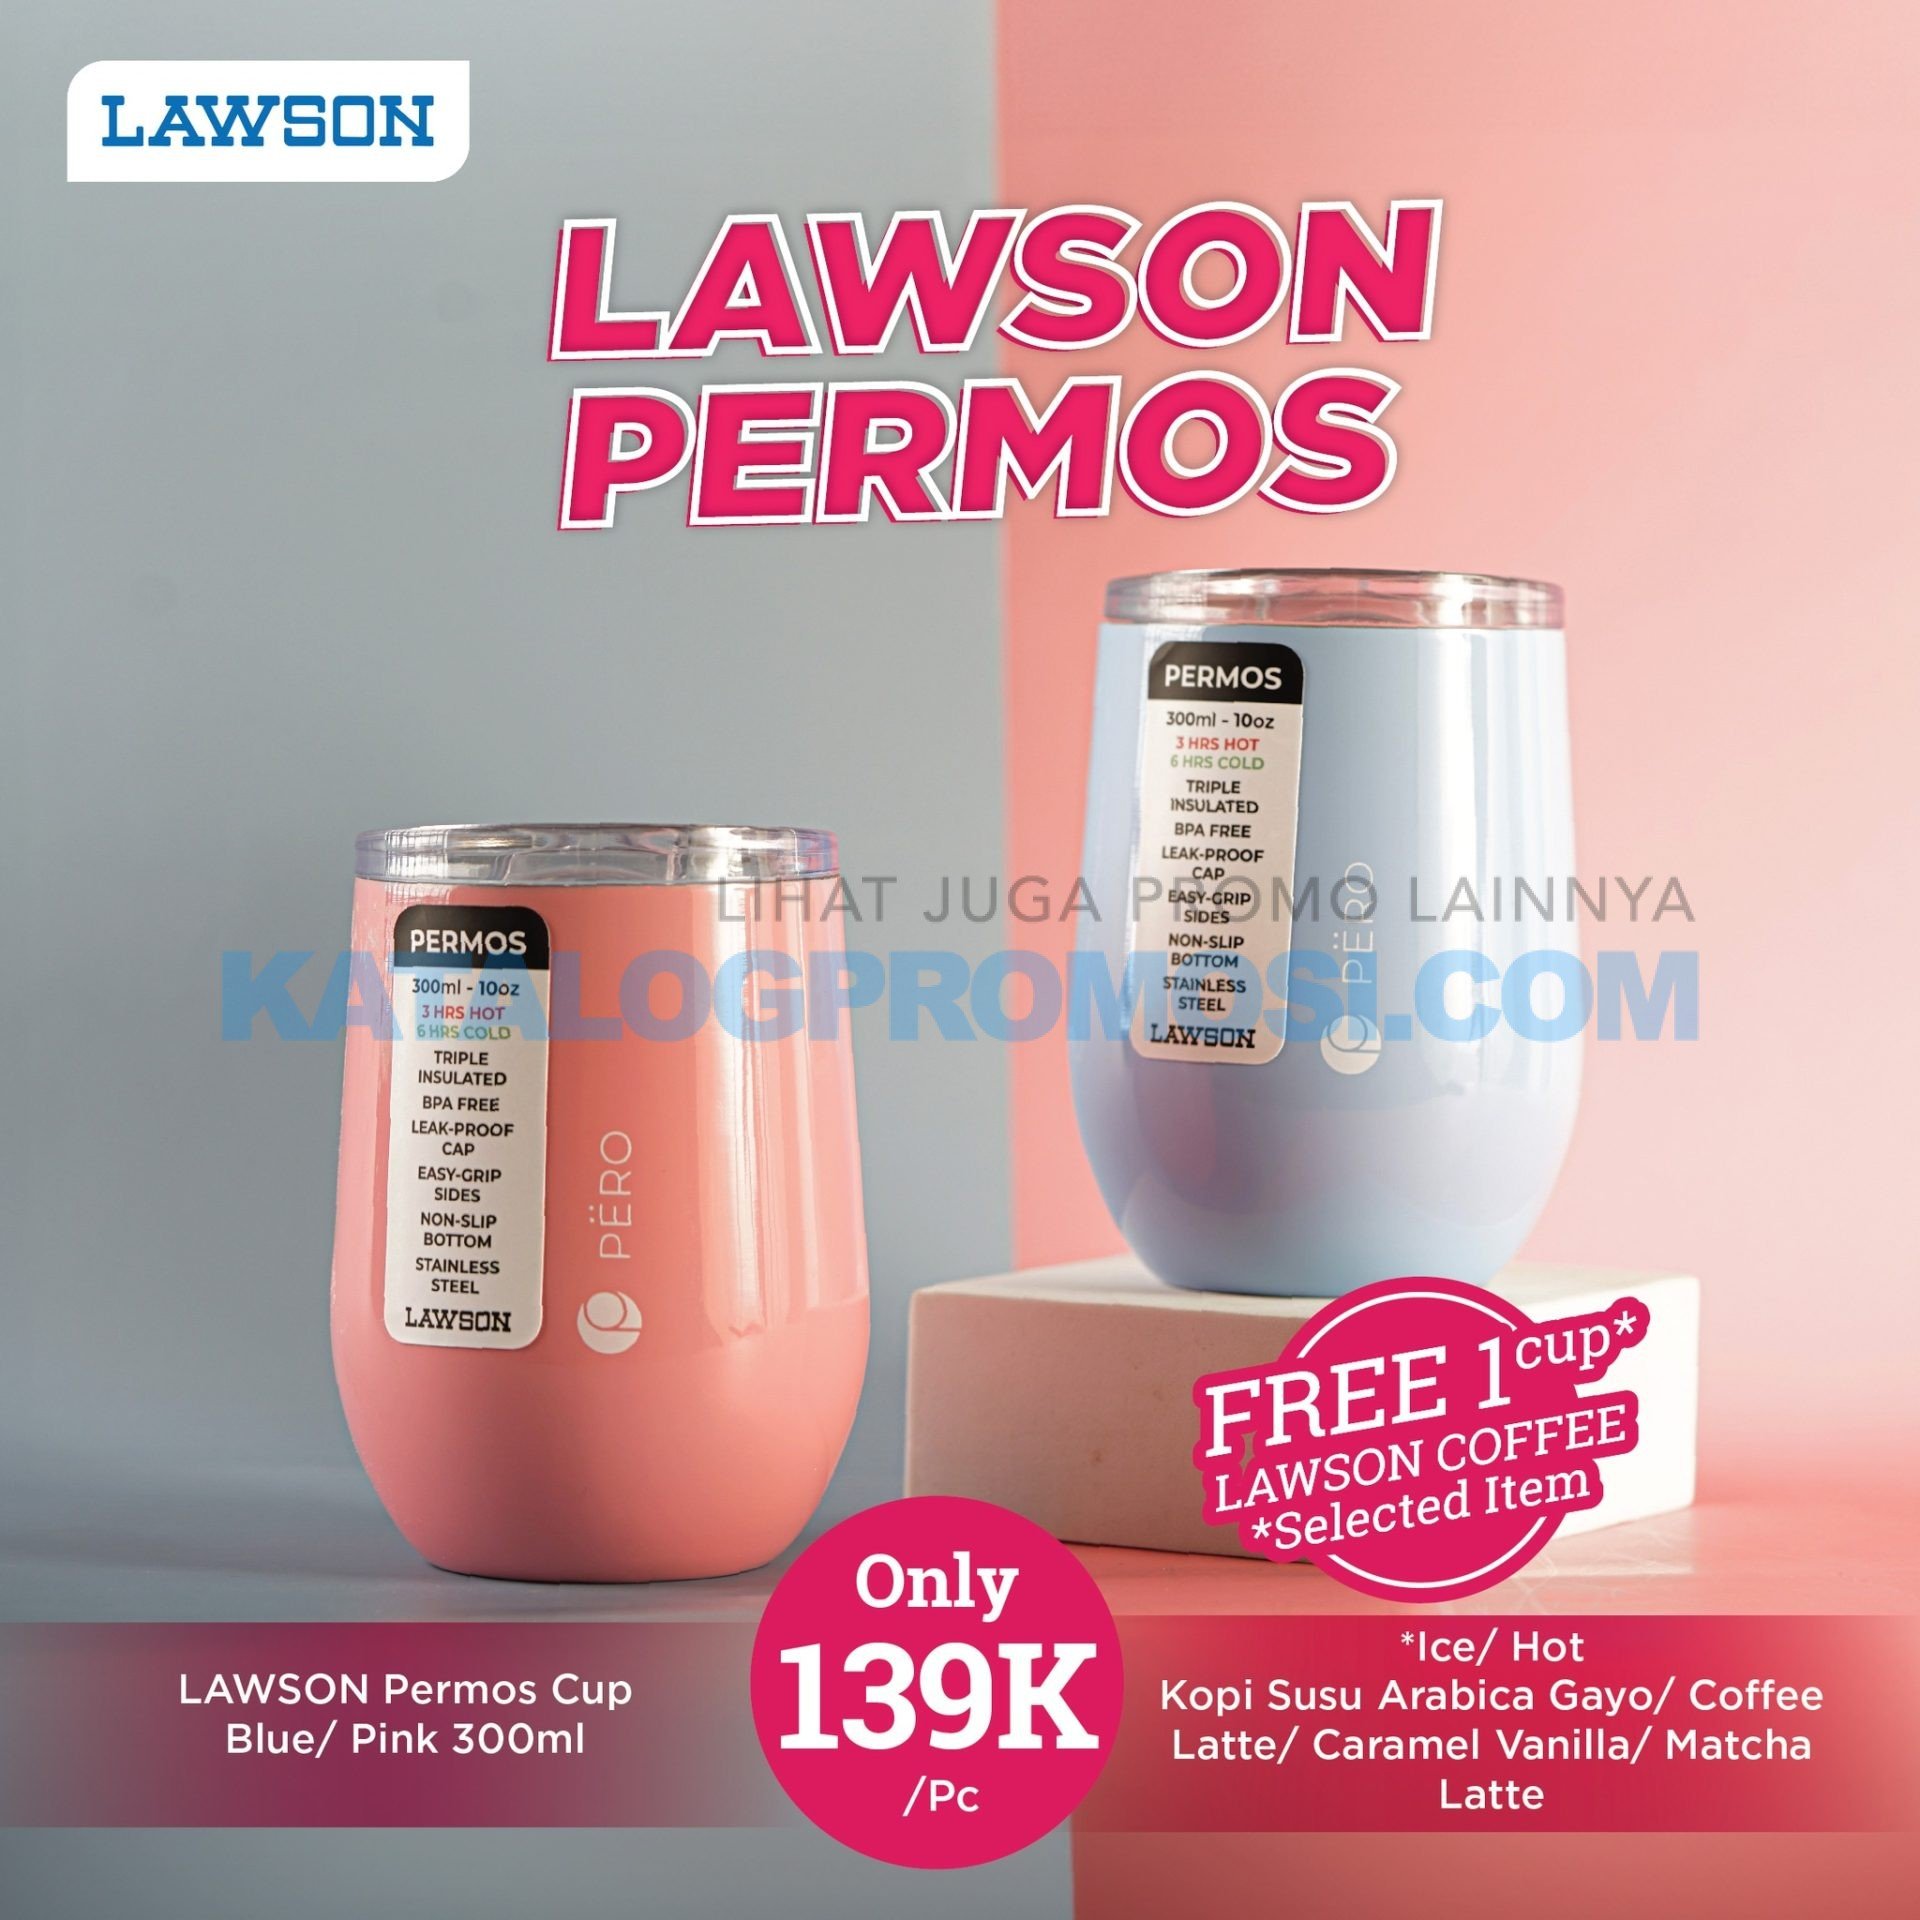 PROMO LAWSON BELI LAWSON PERMOS FREE LAWSON COFFEE‼